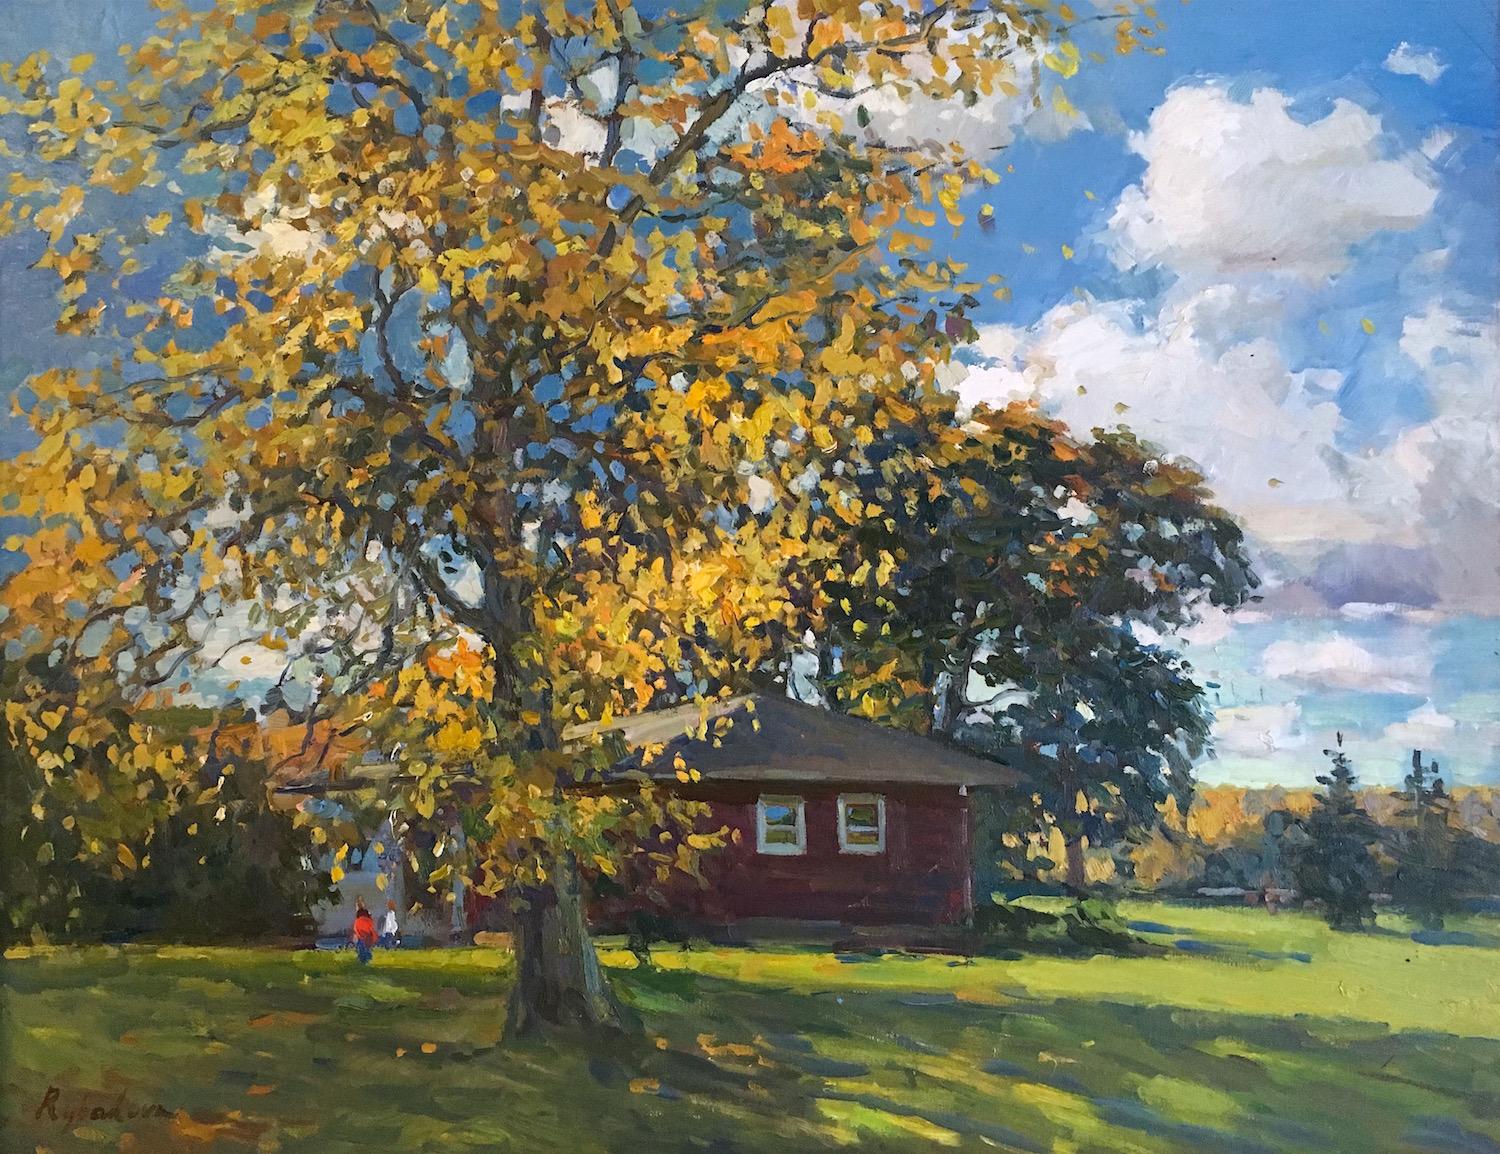 Irina Rybakova Landscape Painting - "Yellow Tree, Red Barn" Contemporary Impressionist rural landscape en plein air